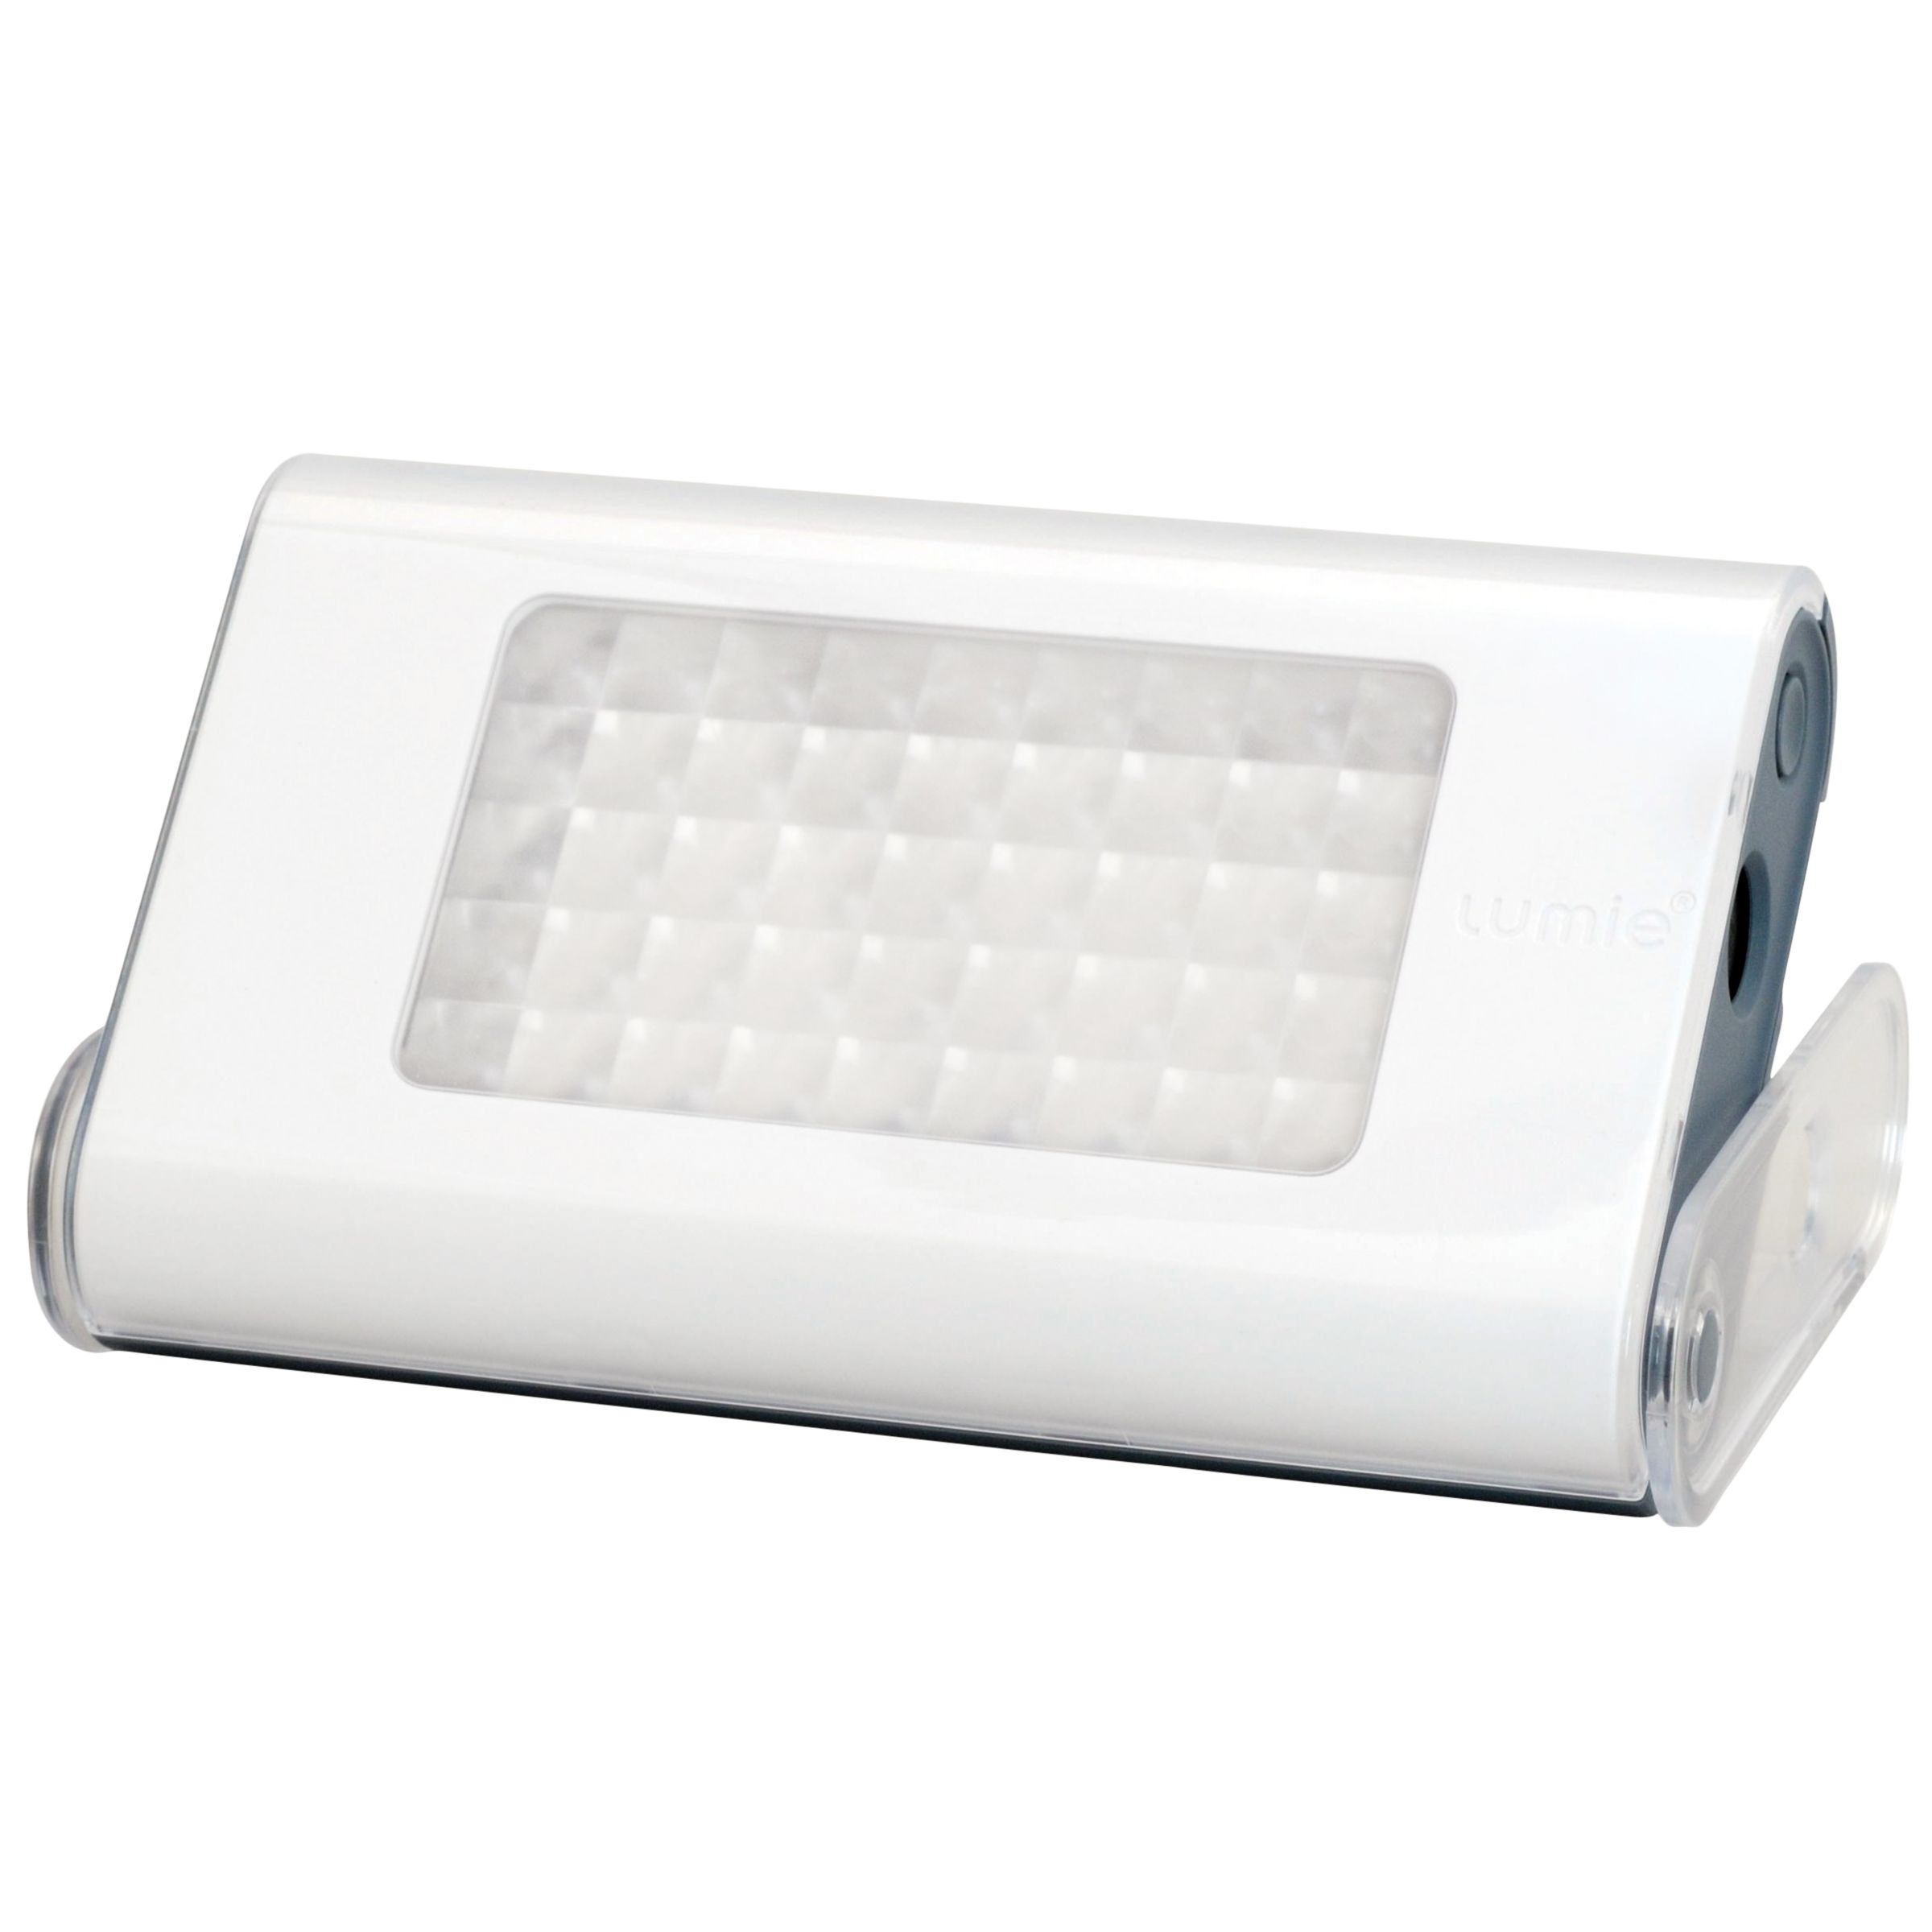 Lumie Zip Portable Light Box